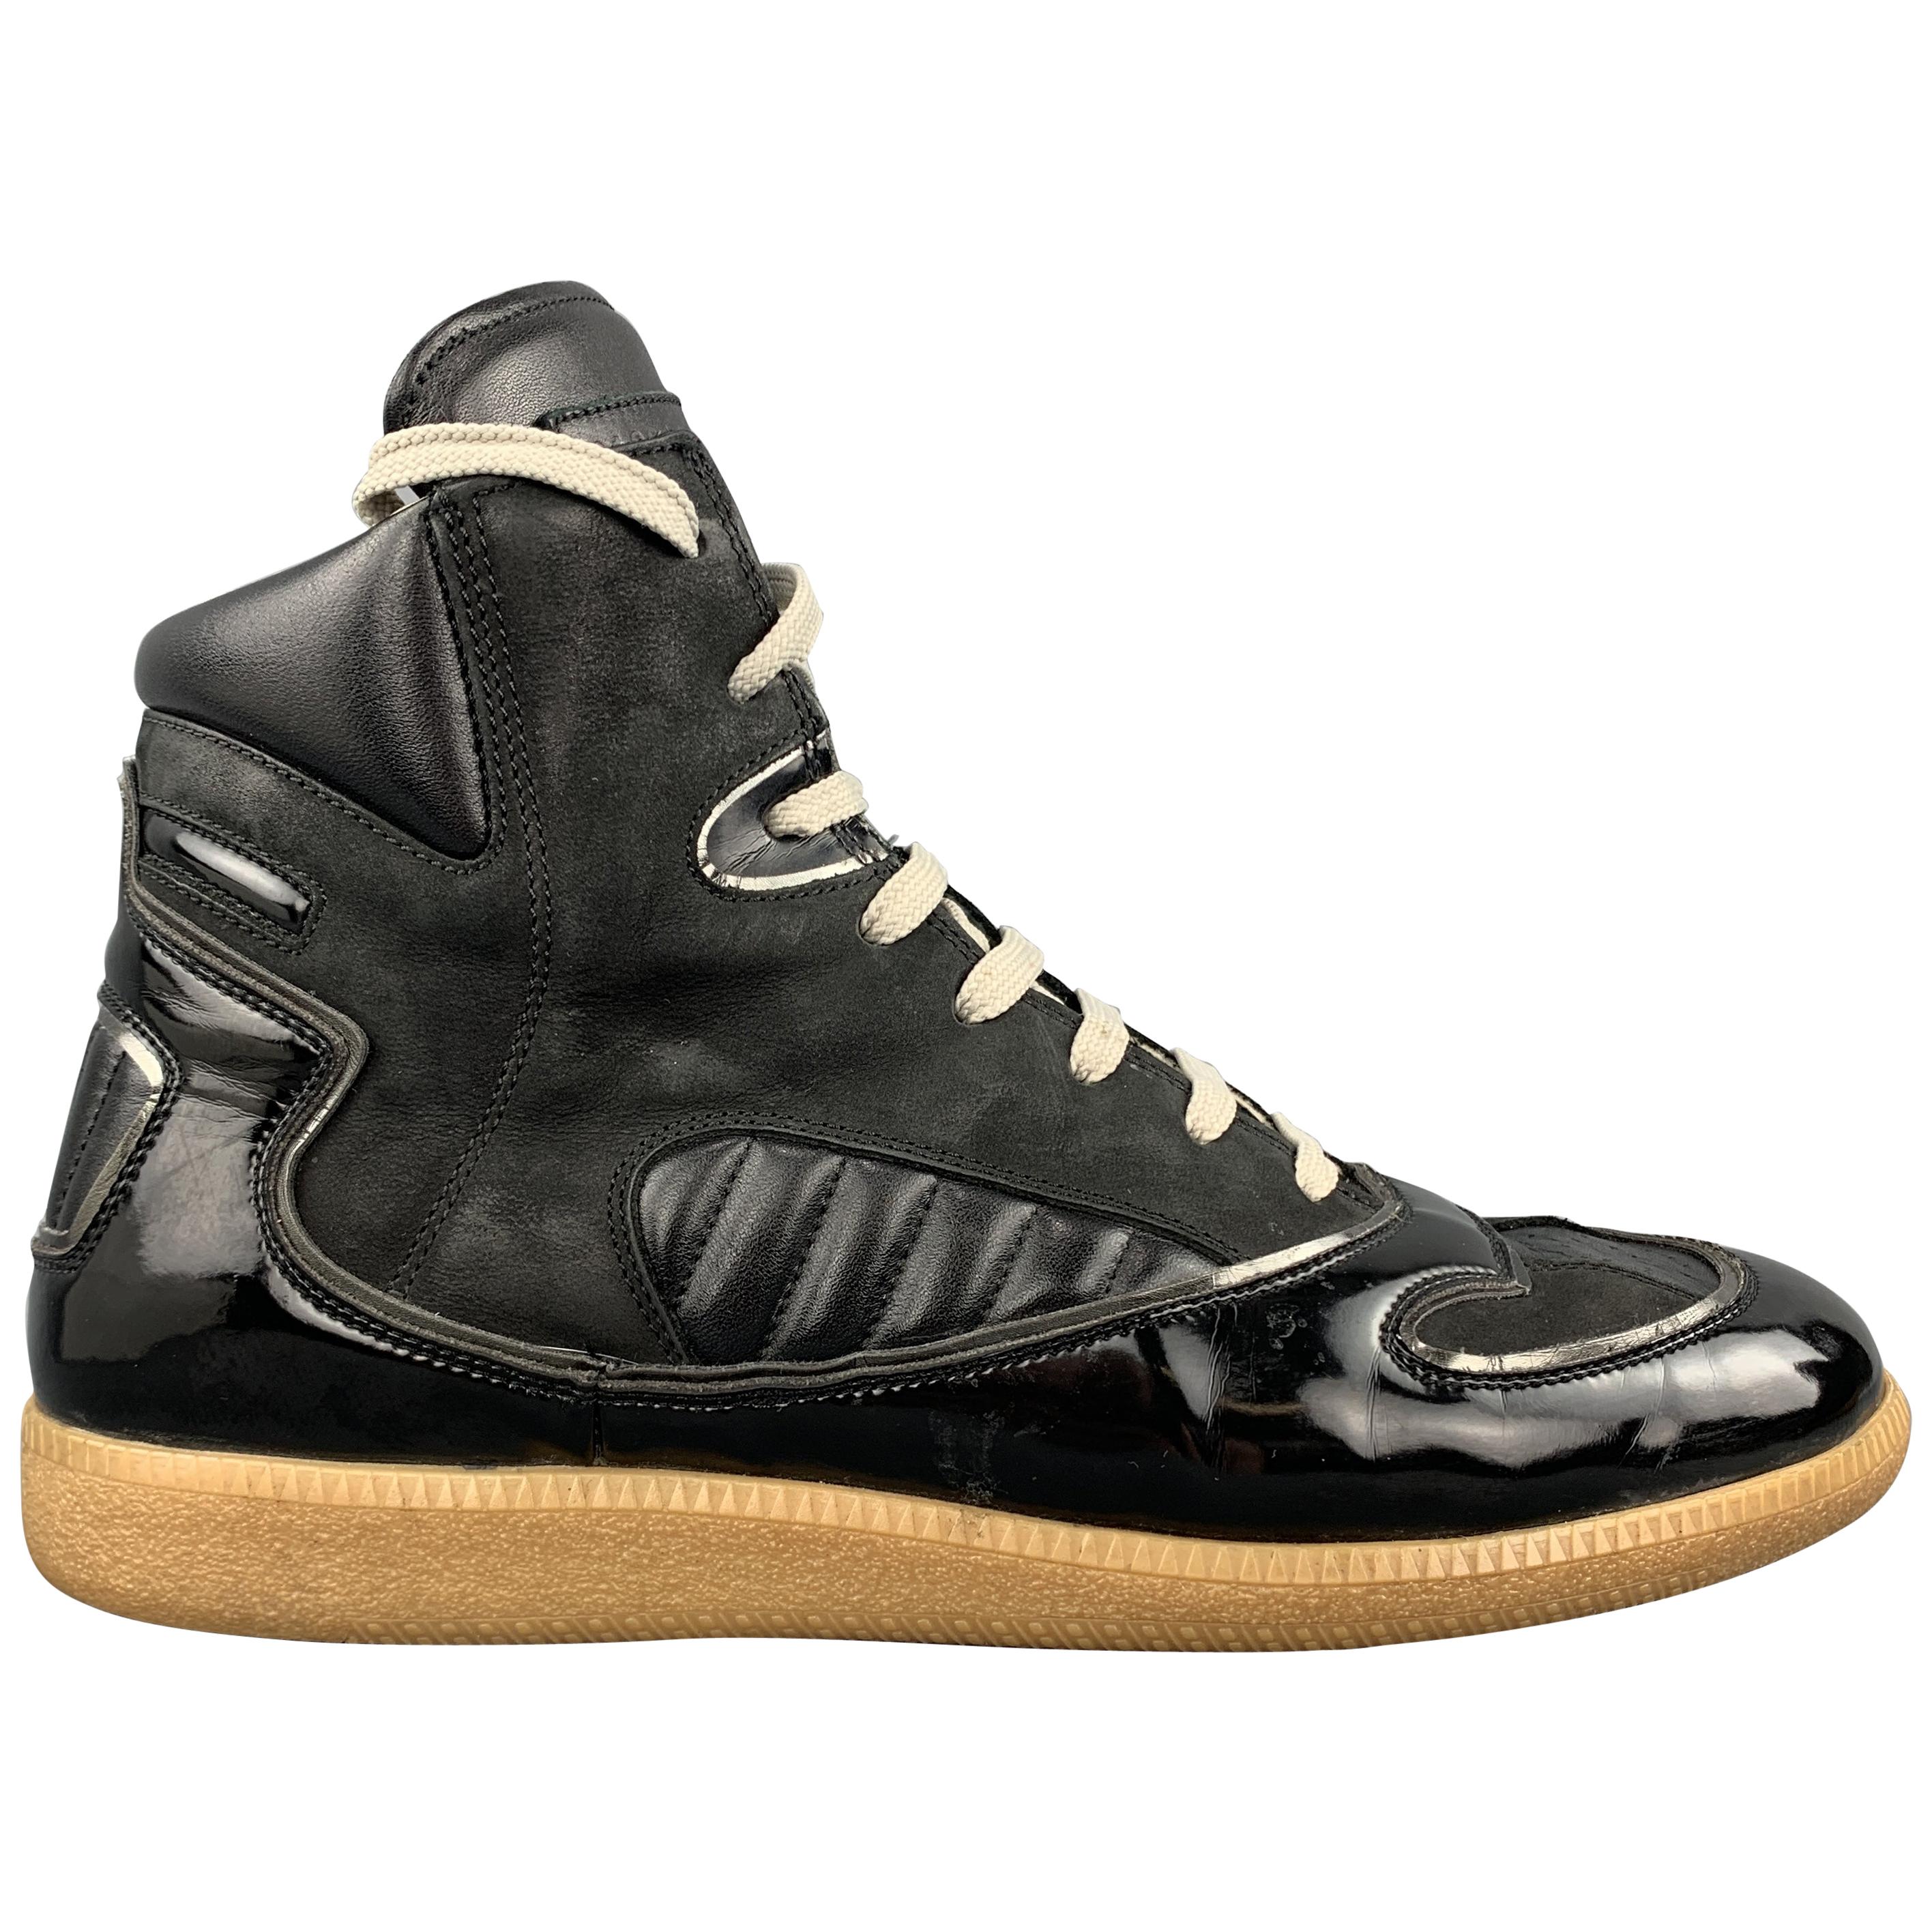 MAISON MARGIELA Size 9 Black Patent Leather High Top Replica Gum Sole Sneakers